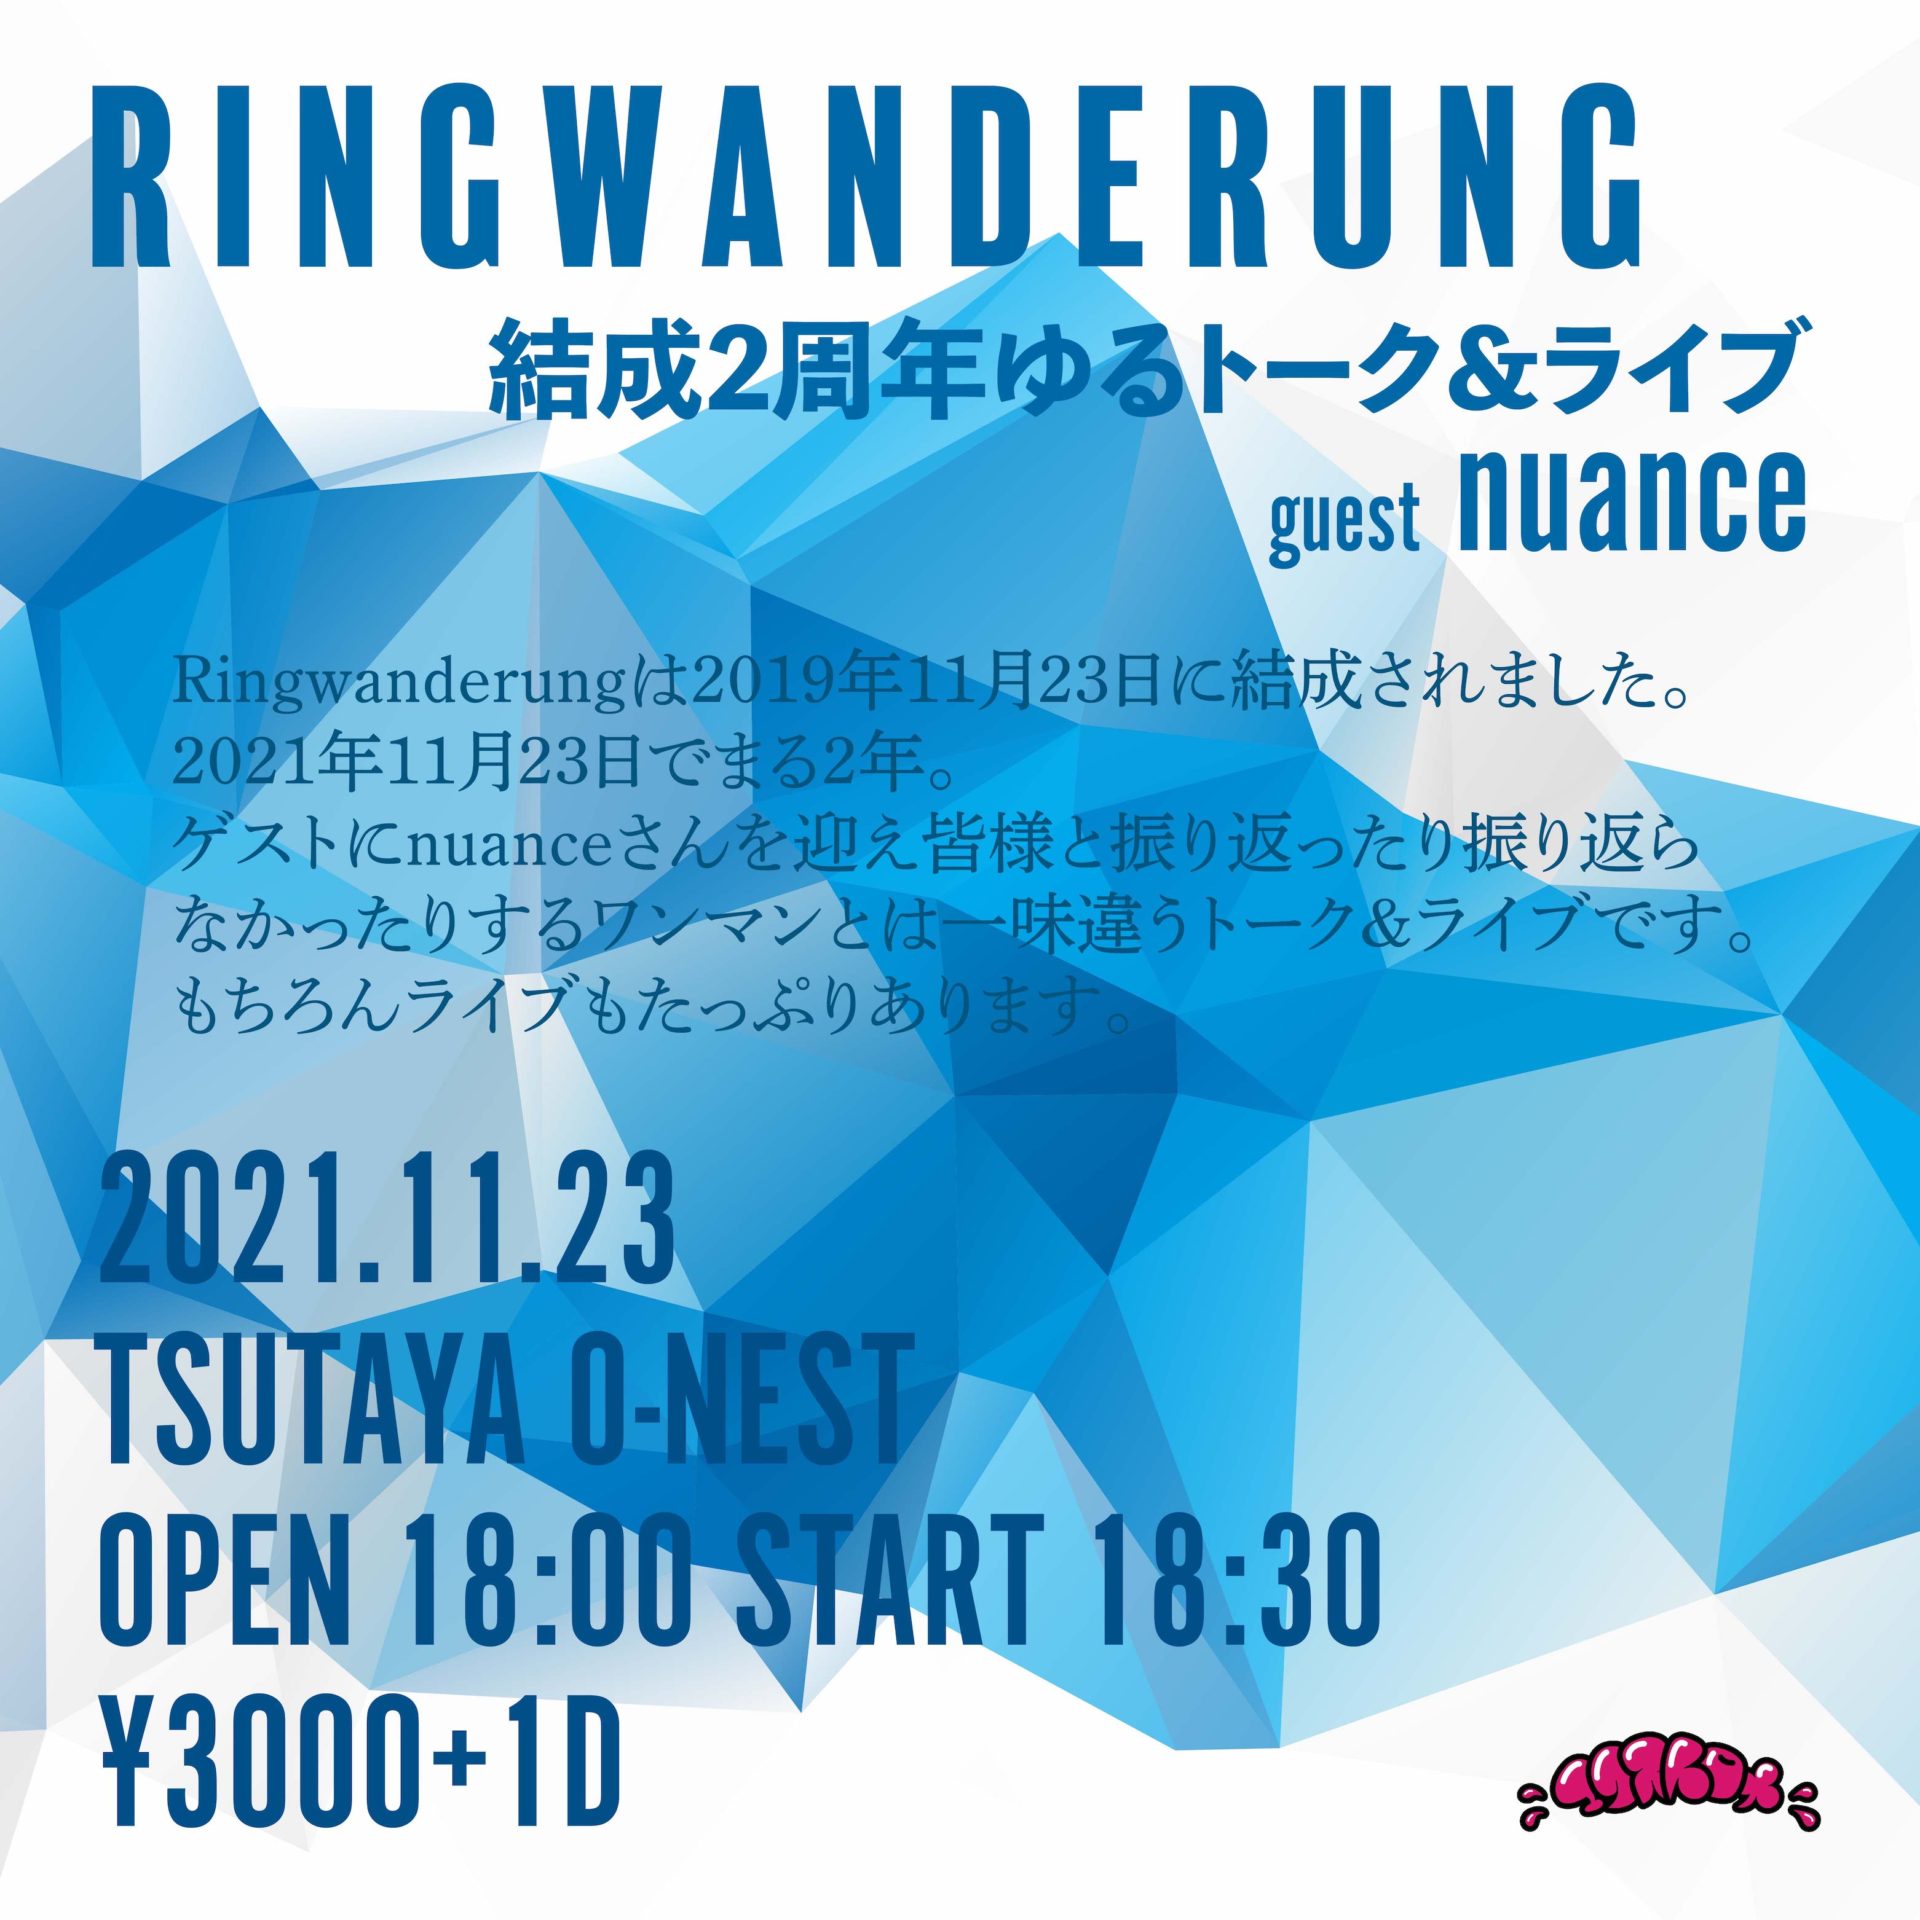 Ringwanderung 結成2周年ゆるトーク&ライブ guest nuance